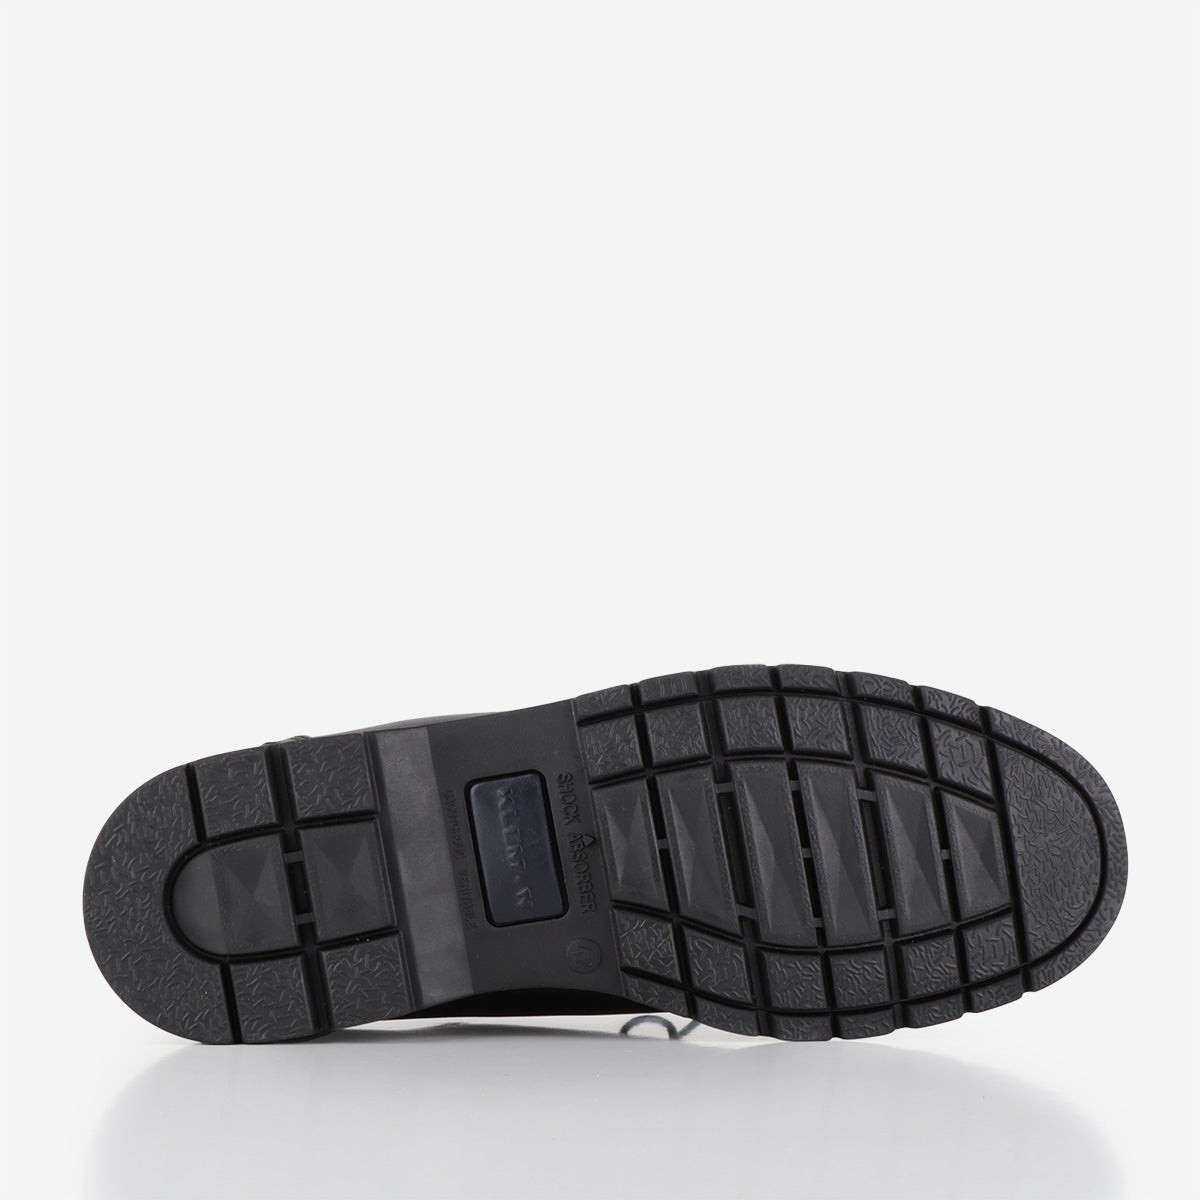 Kleman Padror Shoes, Black, Detail Shot 4